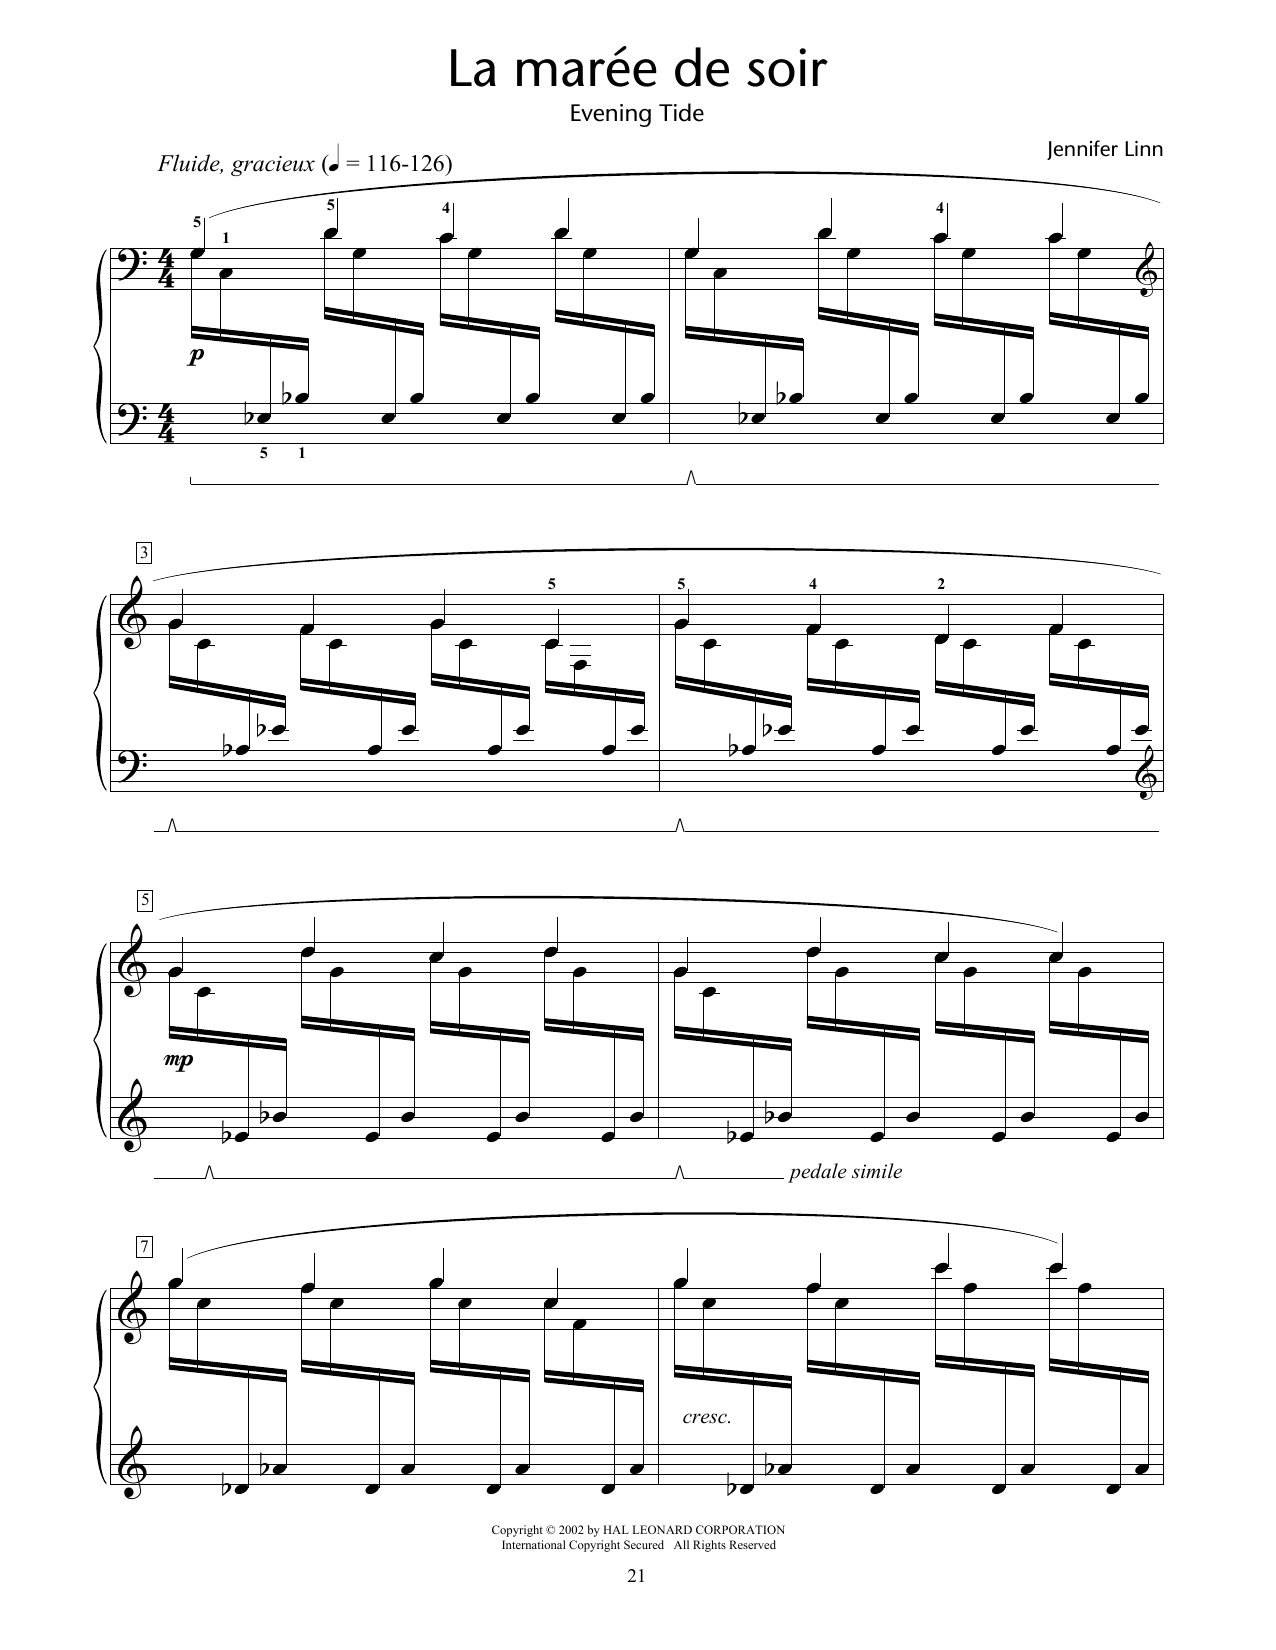 Download Jennifer Linn La maree de soir (Evening Tide) Sheet Music and learn how to play Easy Piano PDF digital score in minutes